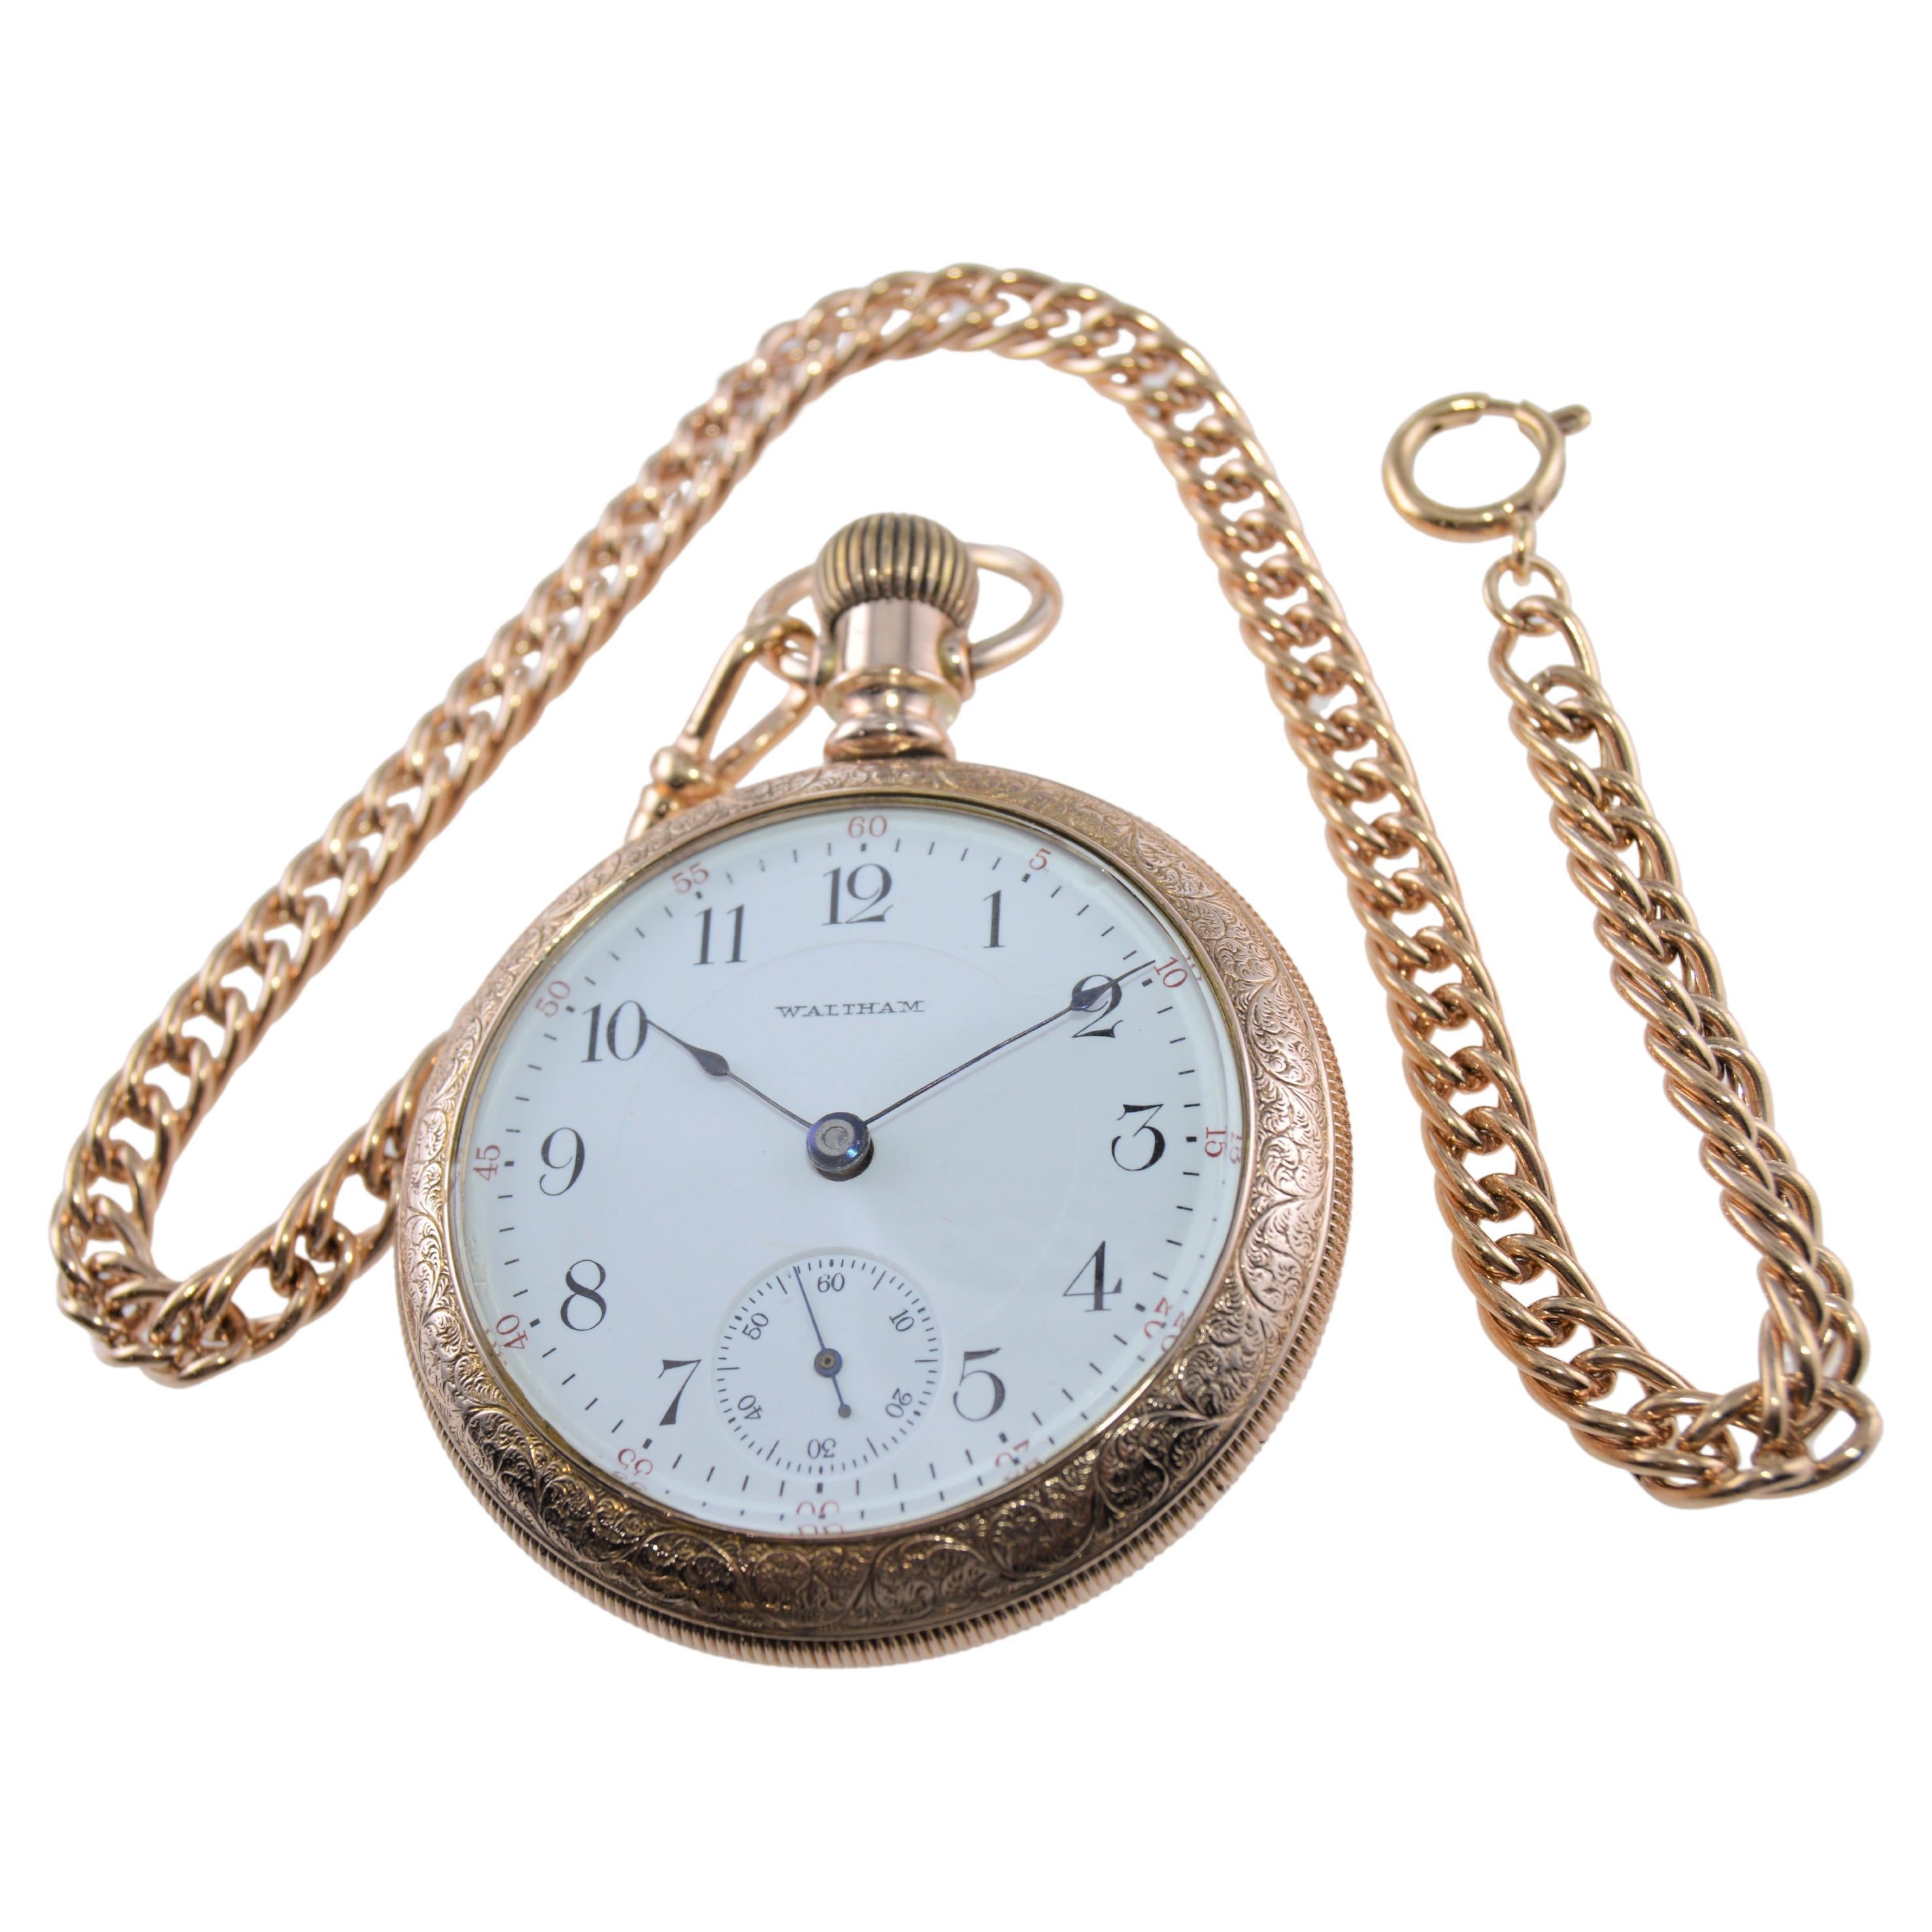 Waltham Open Faced Gold Filled Pocket Watch Flawless Kiln Fired Enamel Dial 1892 For Sale